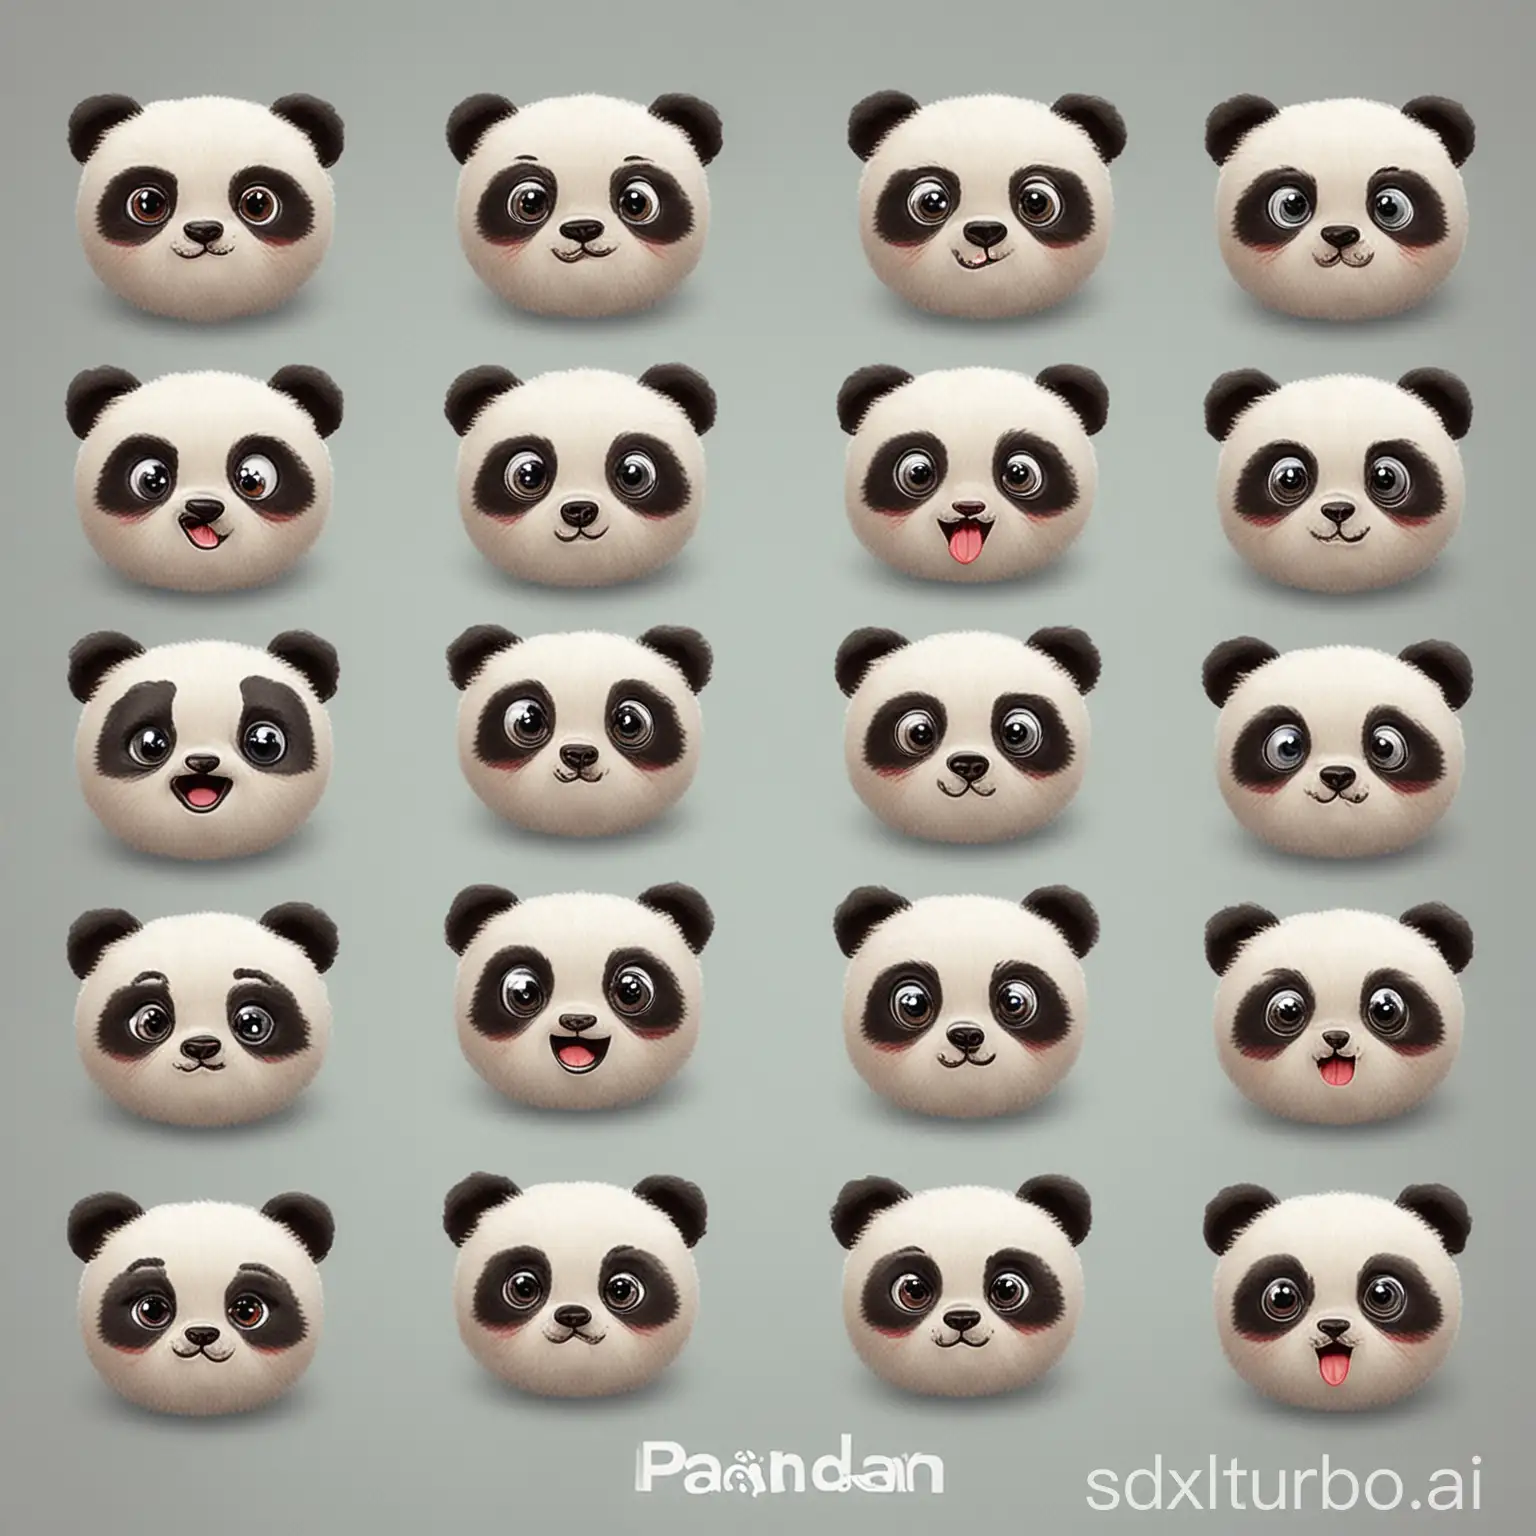 Cute-Panda-Emoji-Pack-Expressive-Pandas-with-Fun-Captions